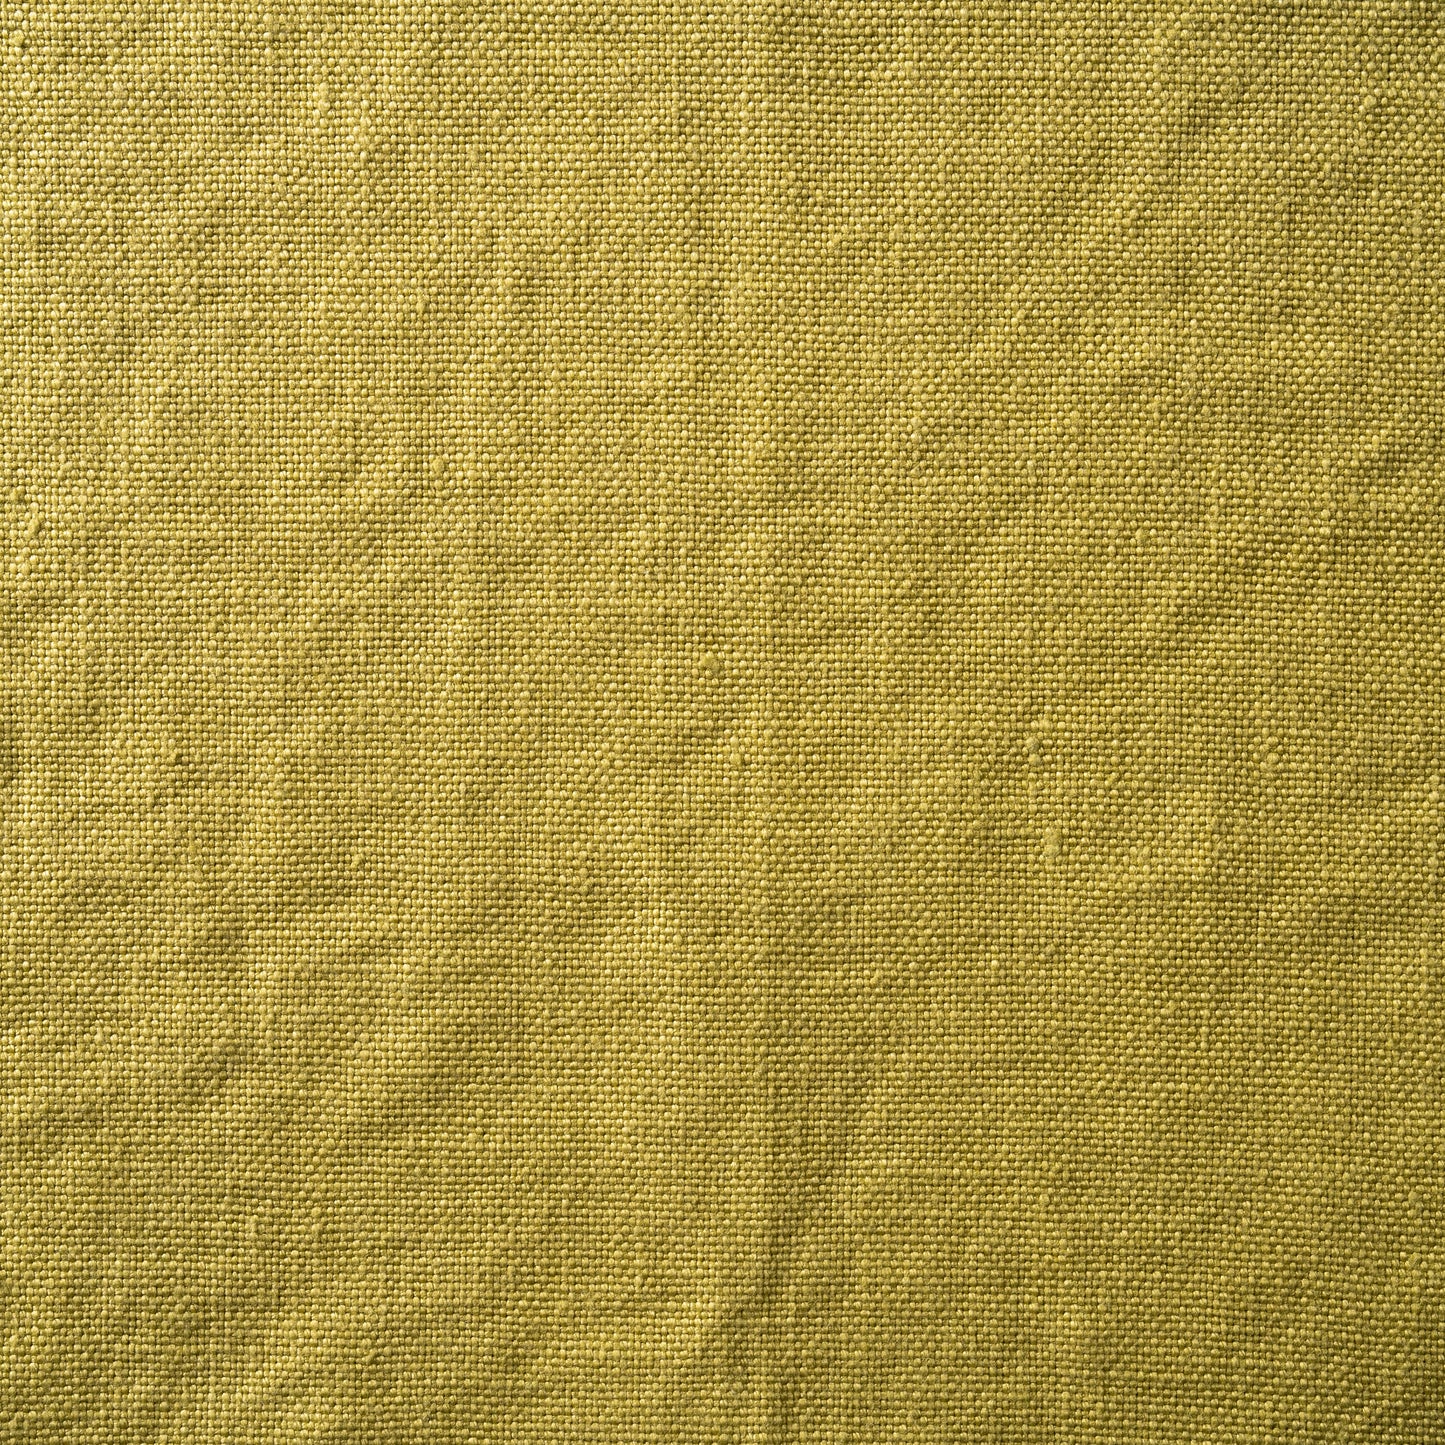 12 oz/sq yard 100% Upholstery/ Slipcover Weight Linen in Husk